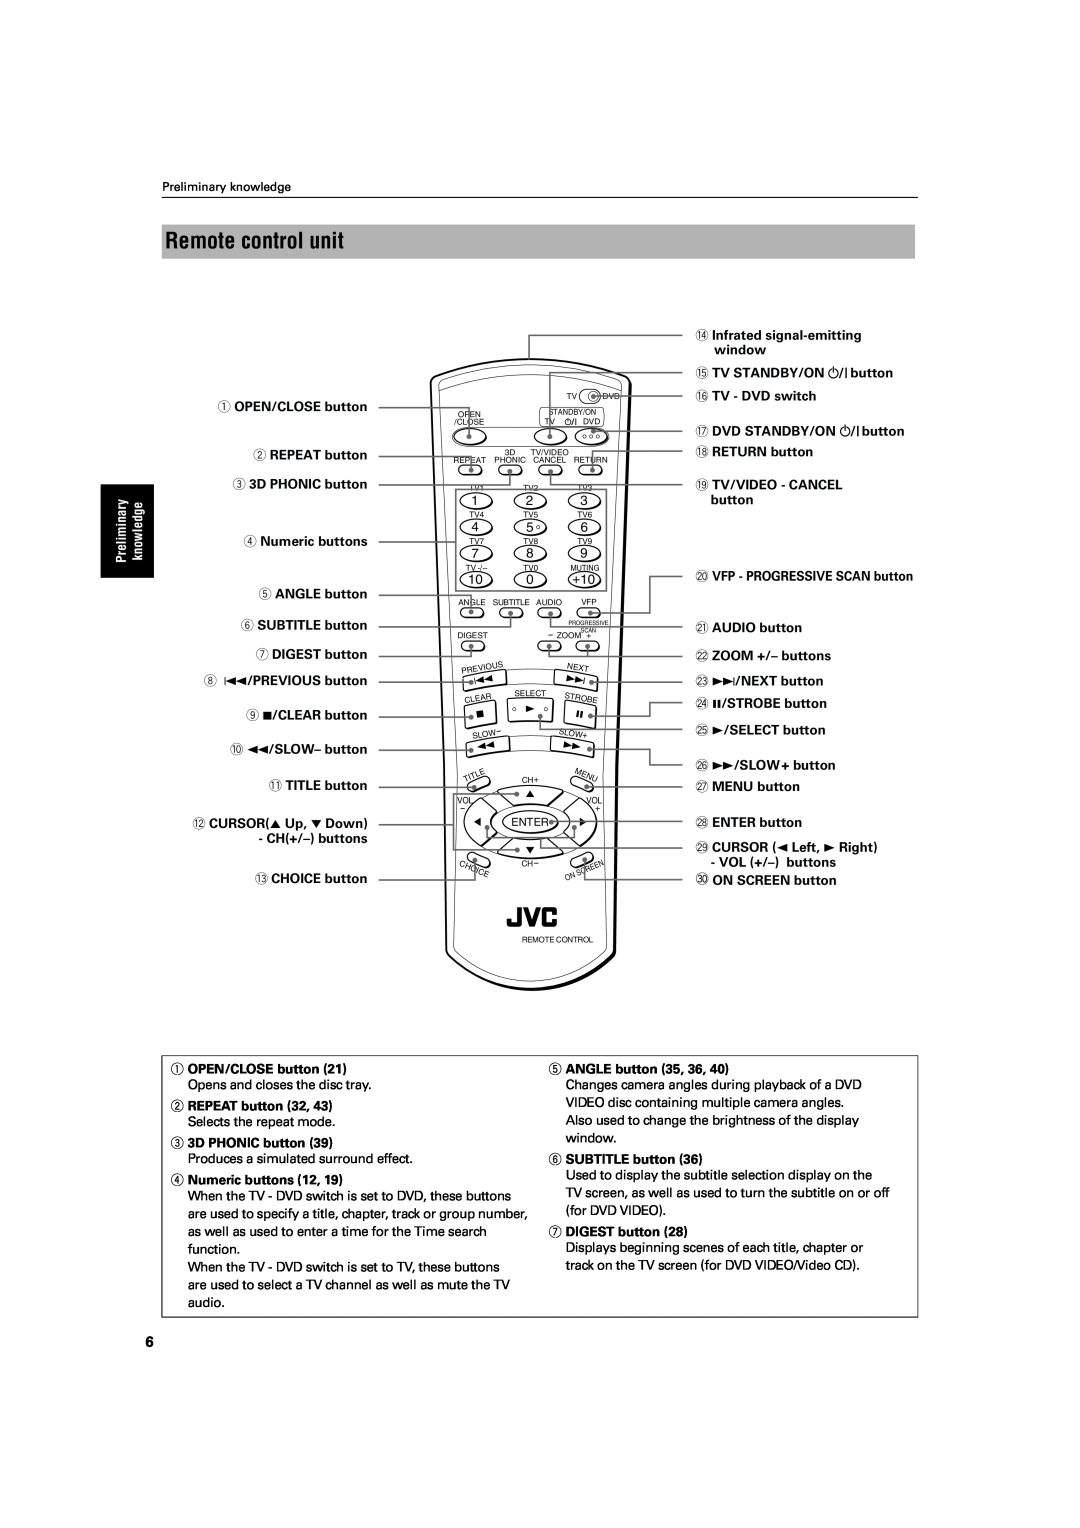 JVC XV-S60 manual Remote control unit, OPEN/CLOSE button, ANGLE button 35, 36, REPEAT button 32, 3 3D PHONIC button 